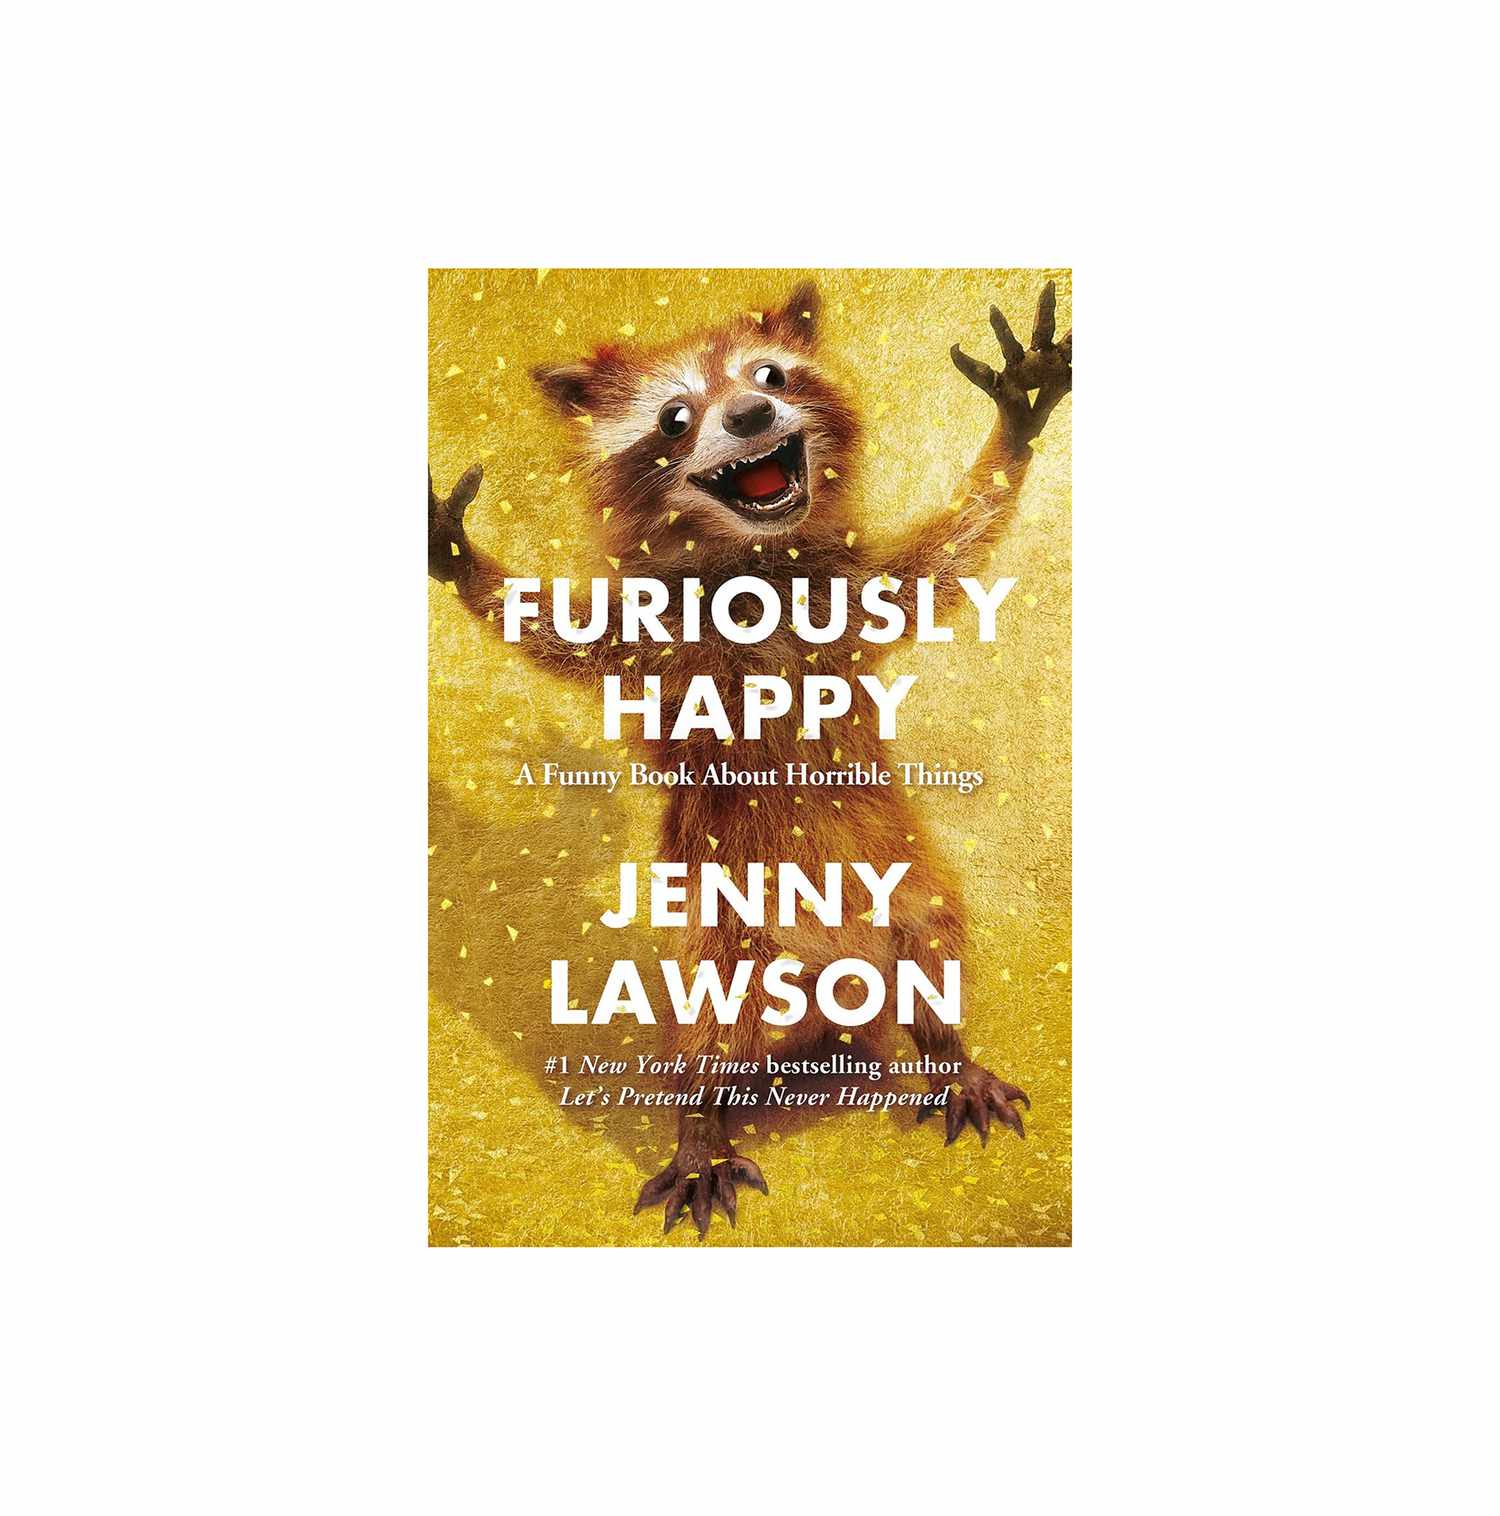 Furiously Happy, by Jenny Lawson